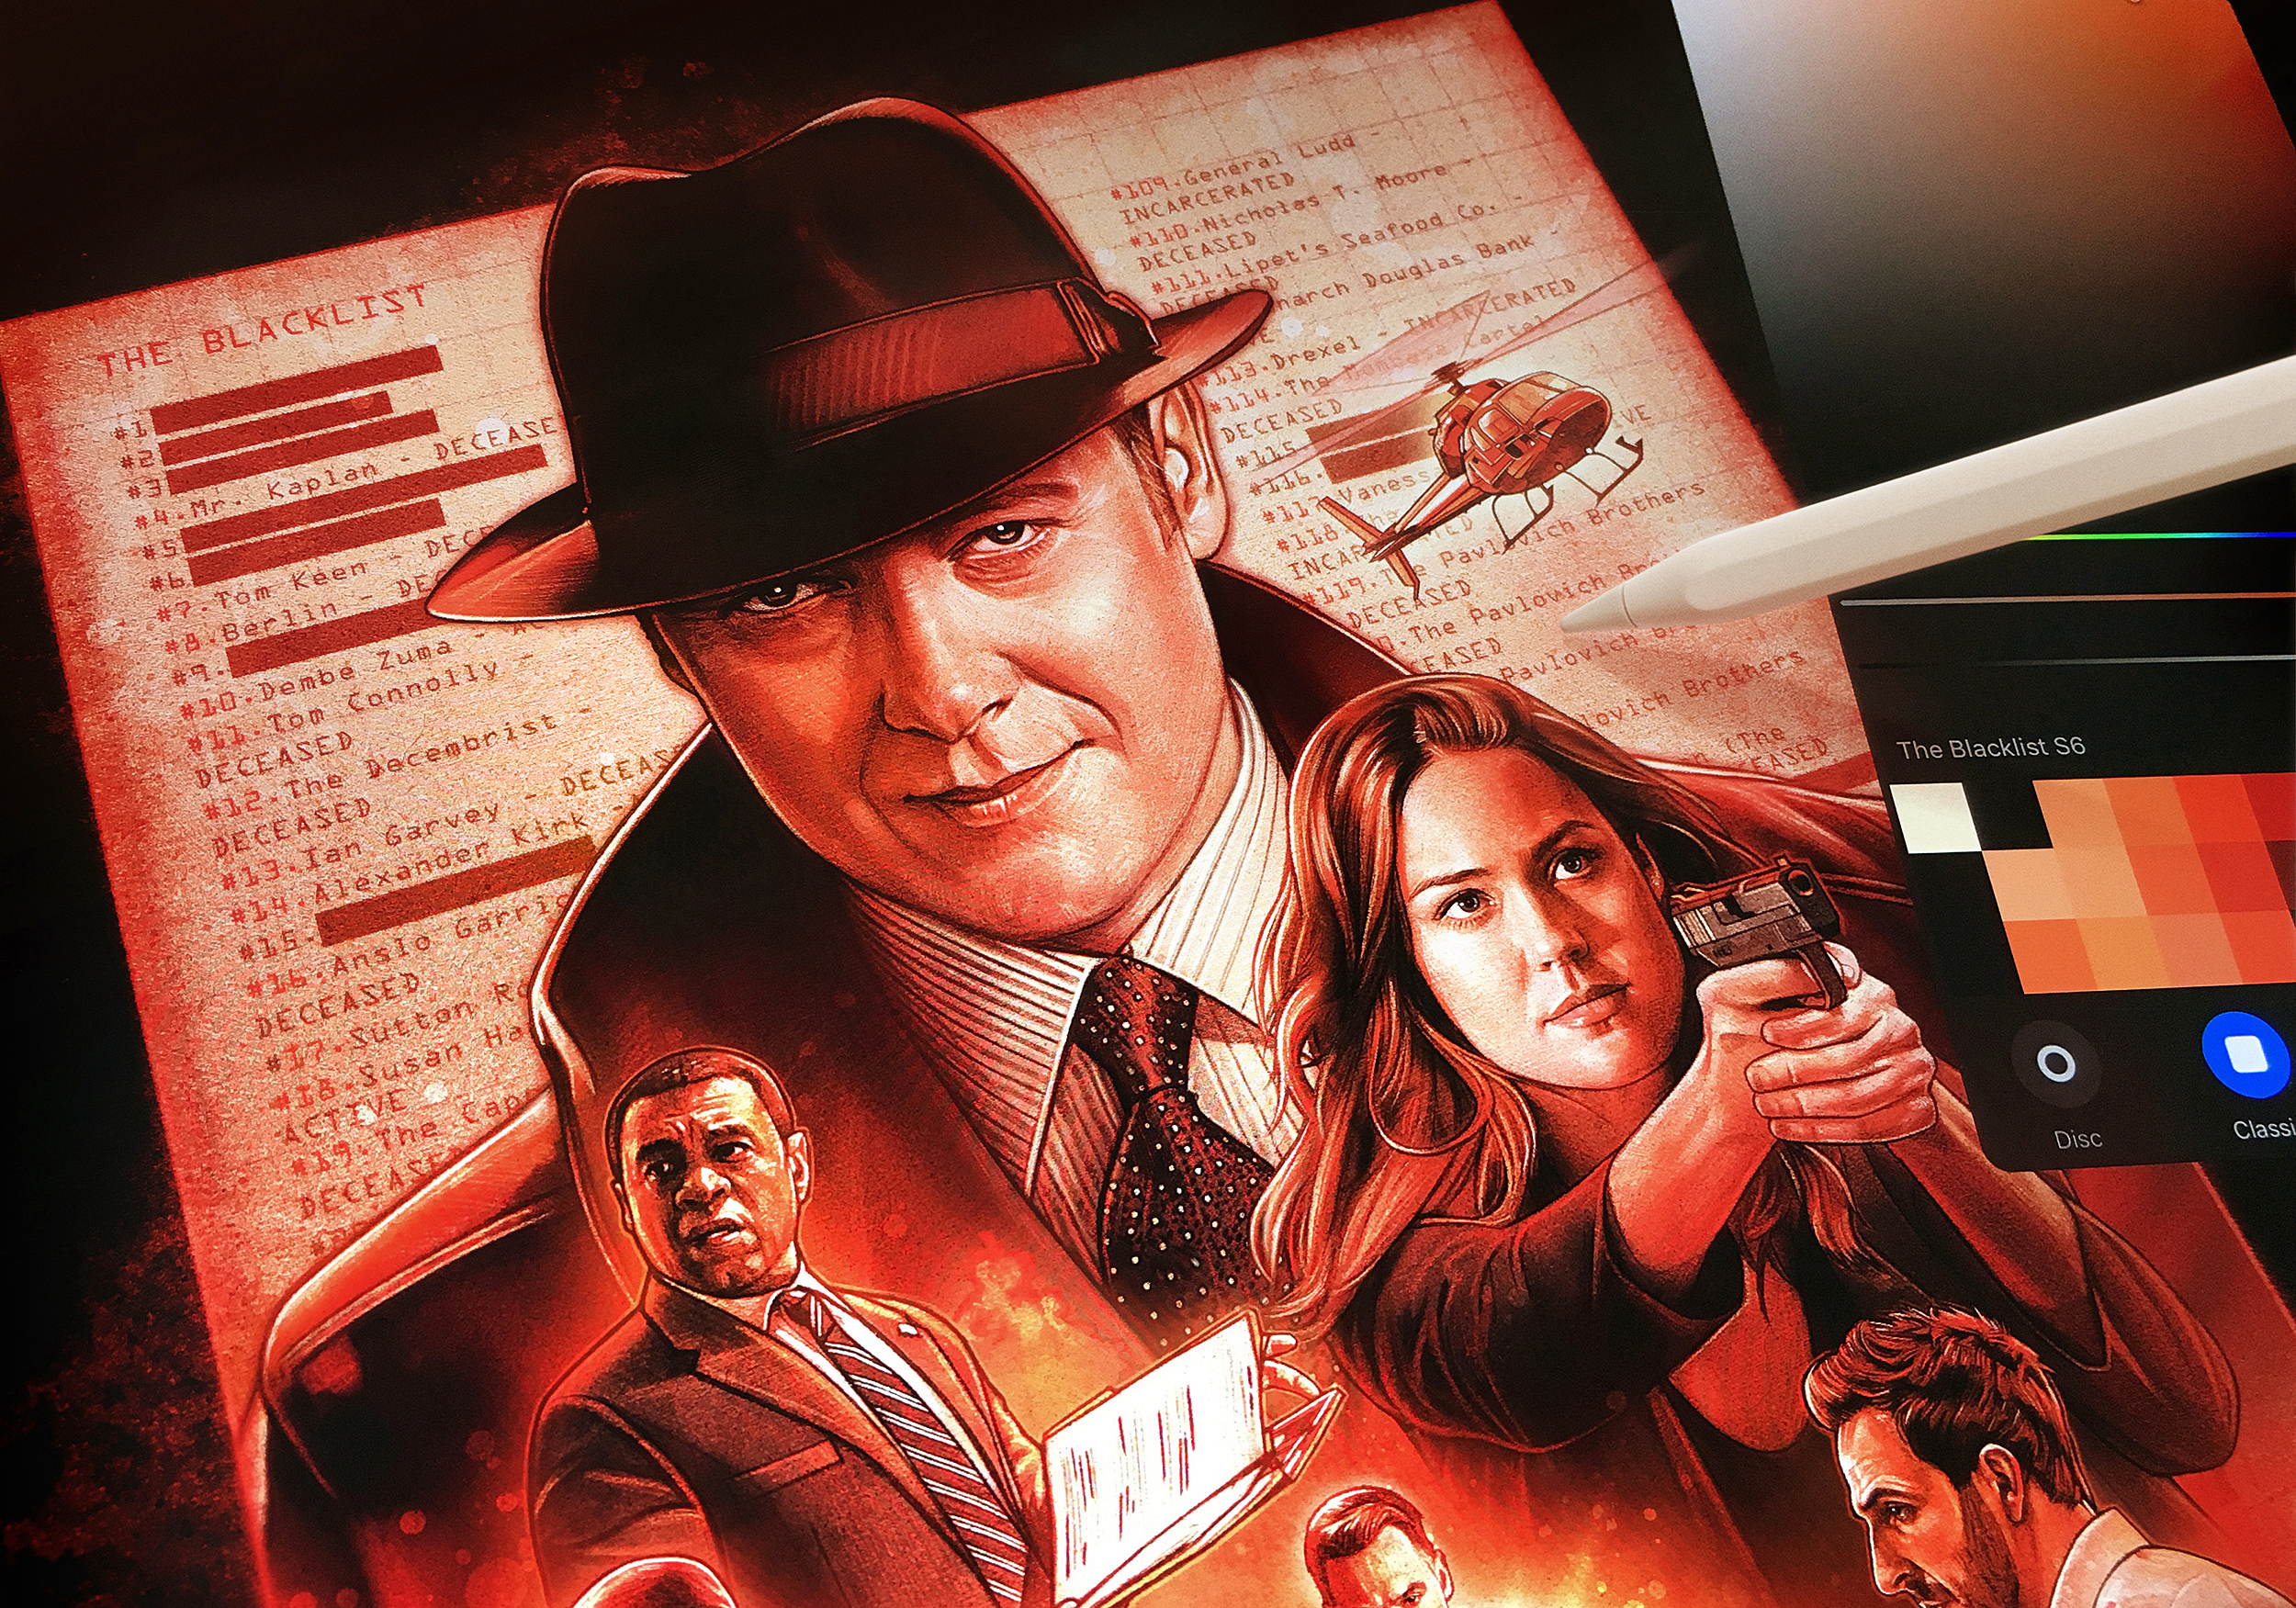 The Blacklist Season 6 Poster - iPad Illustration - by Kyle Lambert